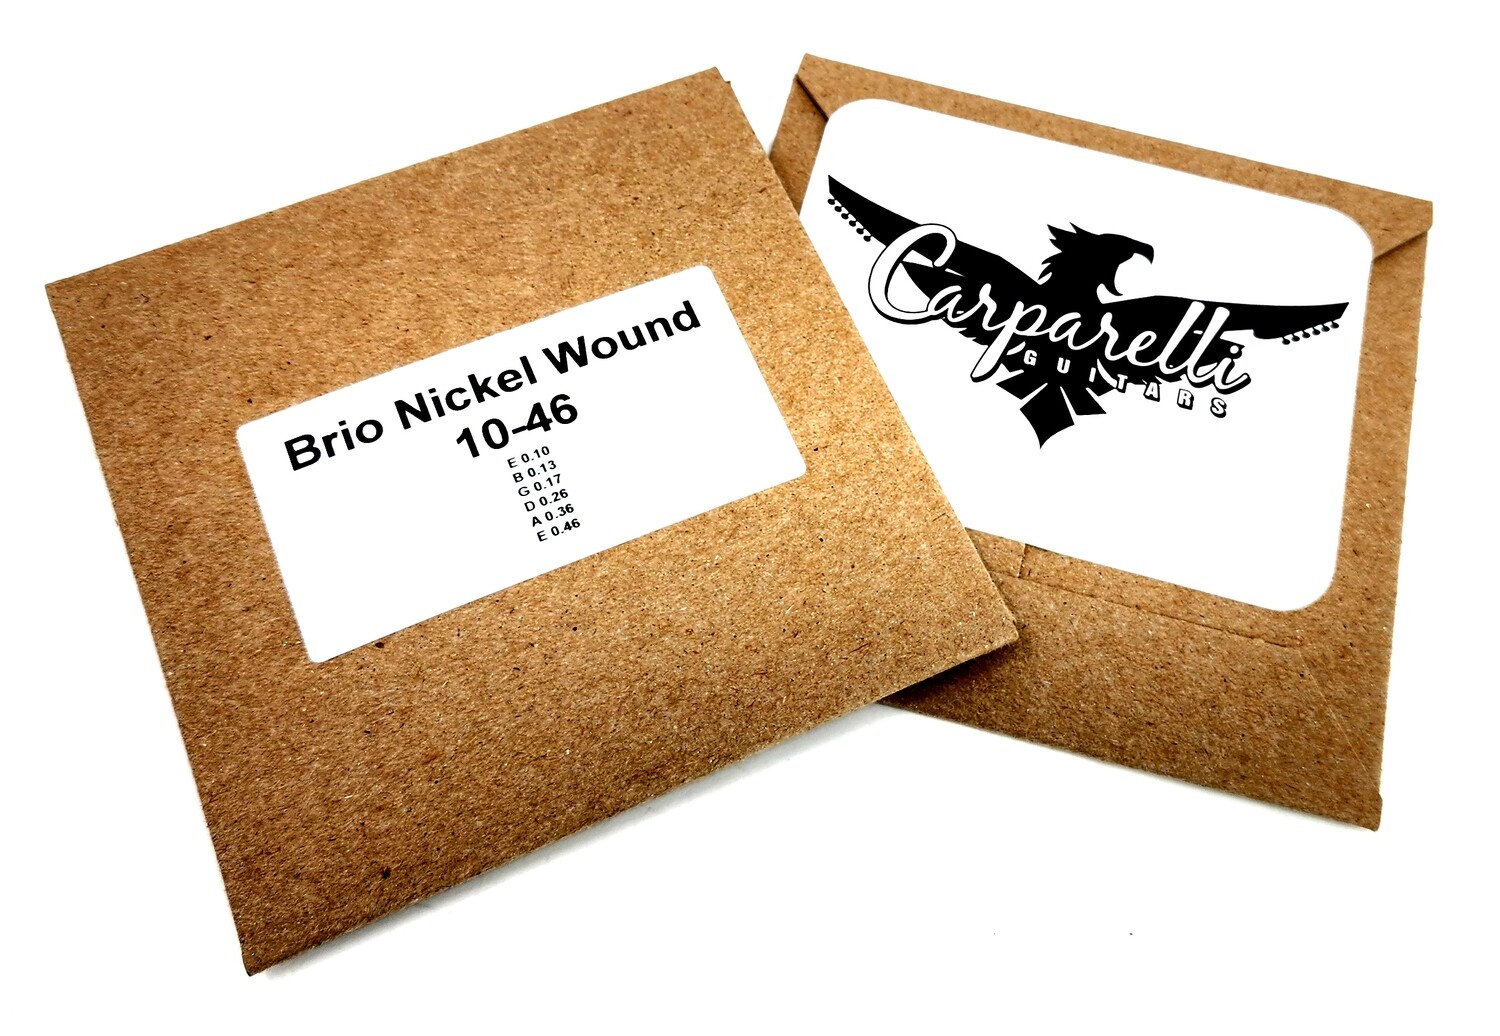 Brio Nickel Wound 10-46 Strings